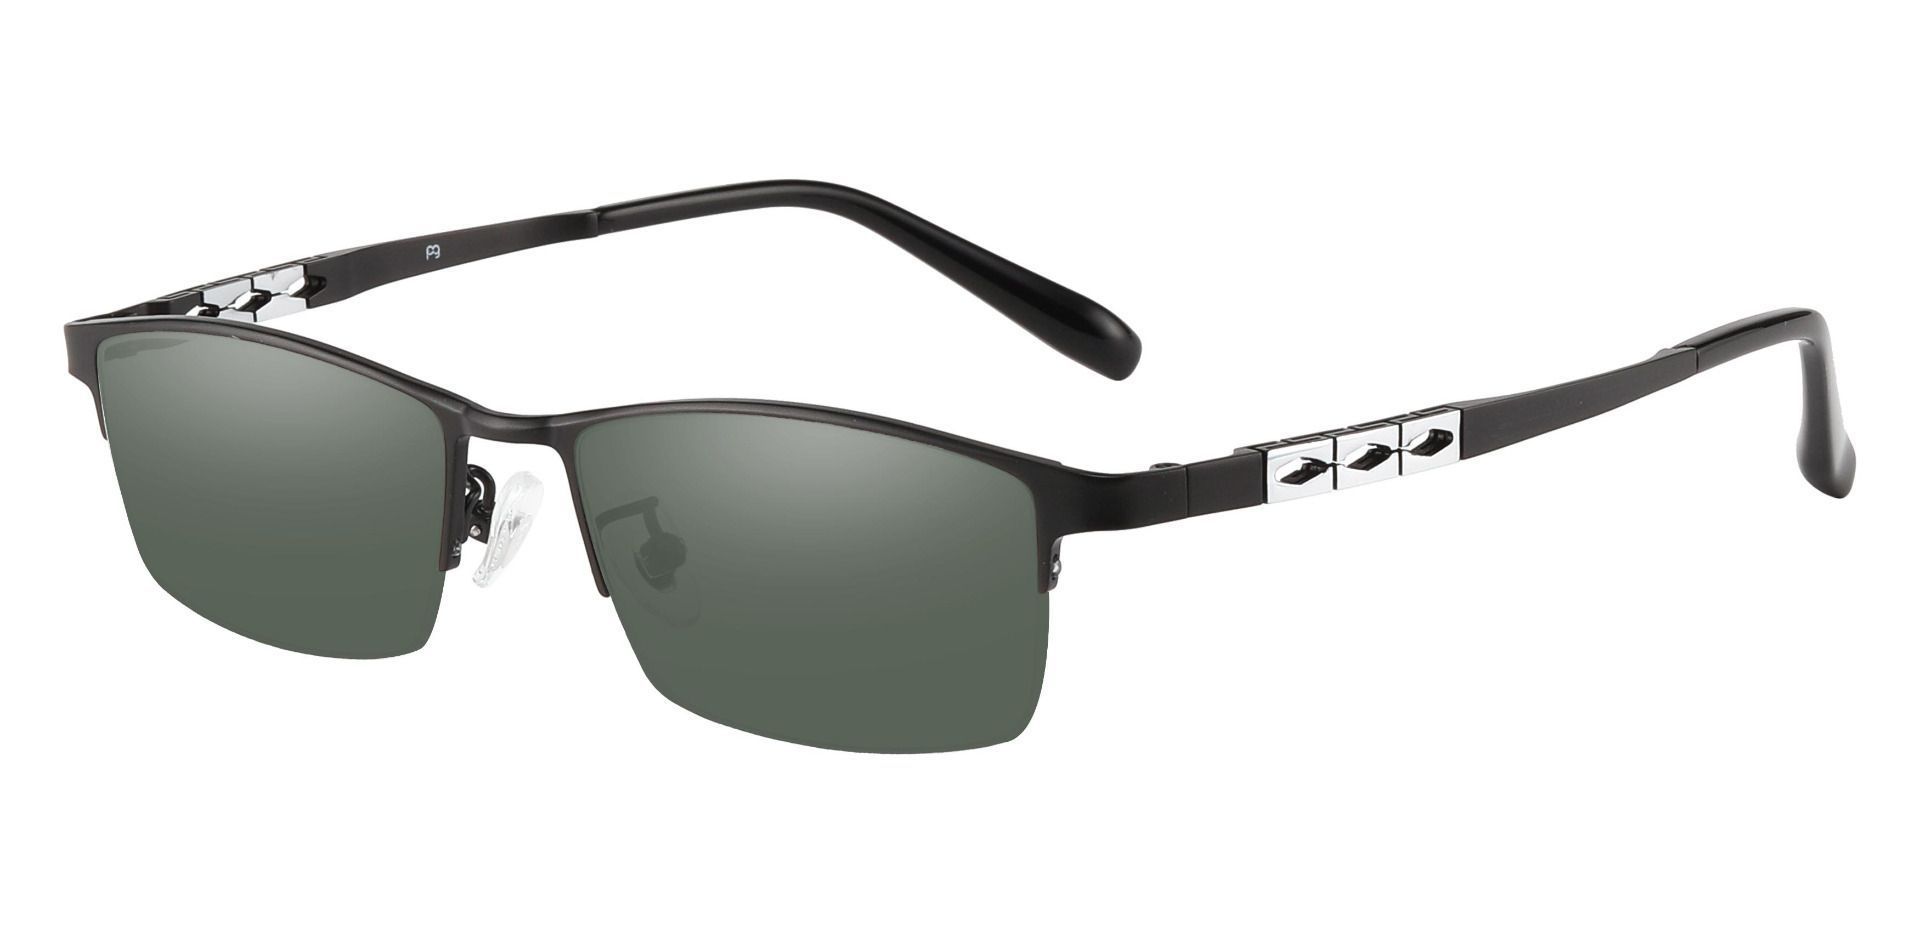 Burlington Rectangle Non-Rx Sunglasses - Black Frame With Green Lenses